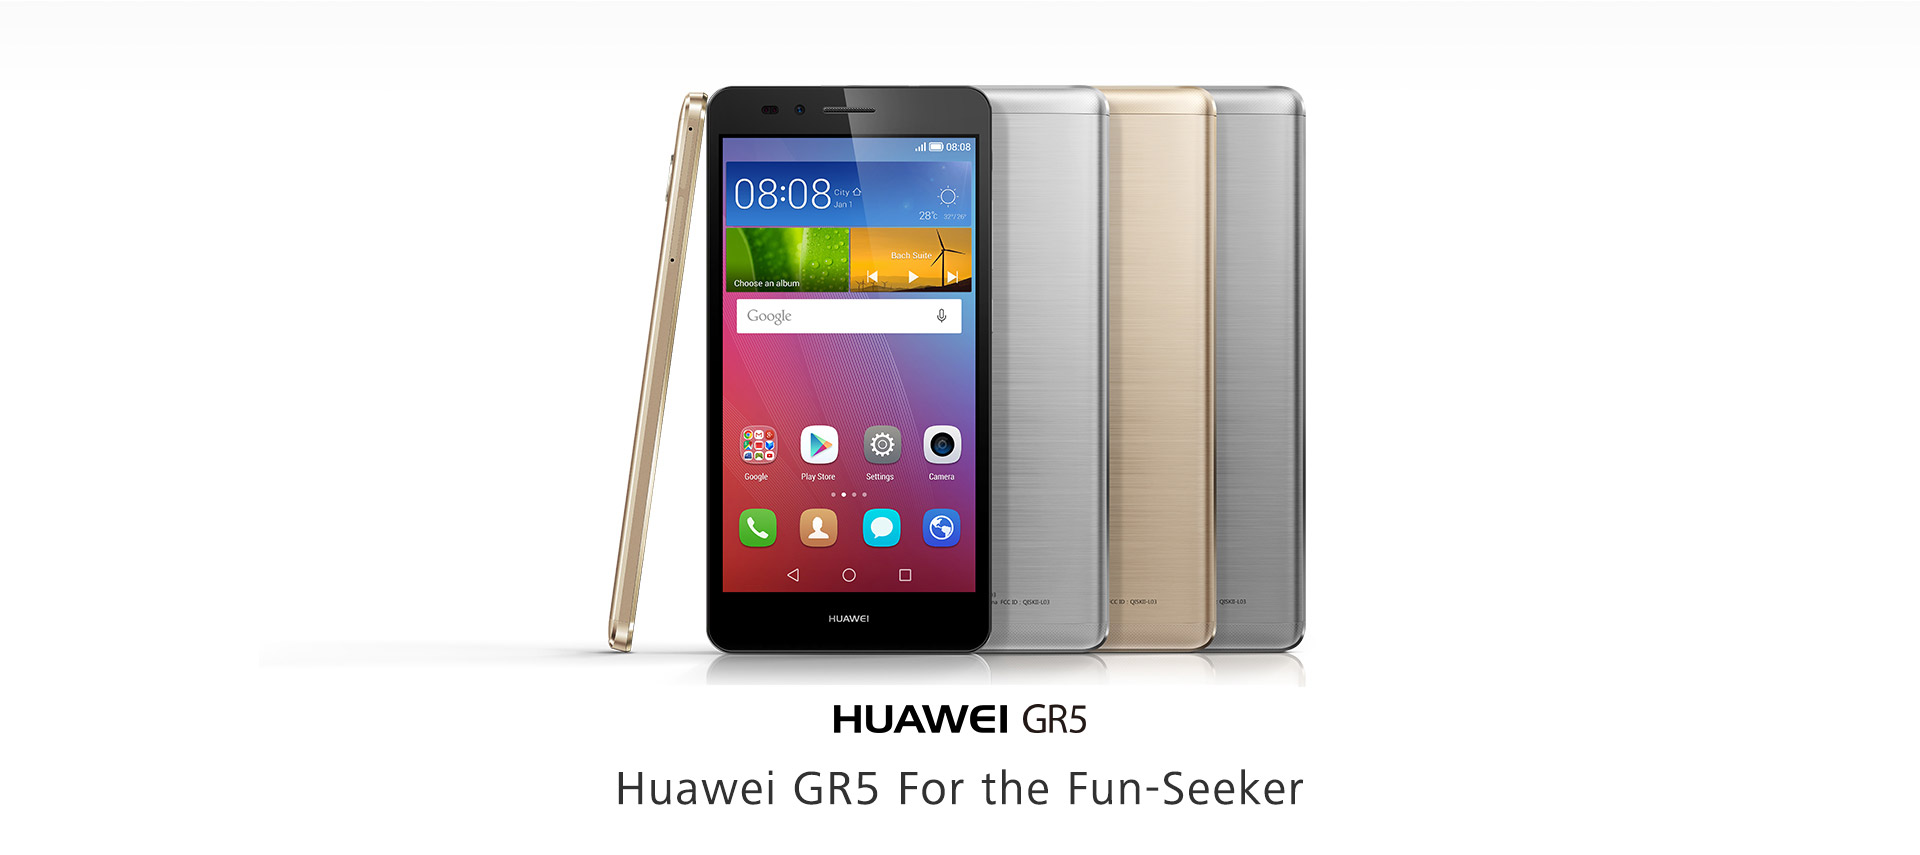 مميزات و عيوب و مراجعة هاتف Huawei GR5